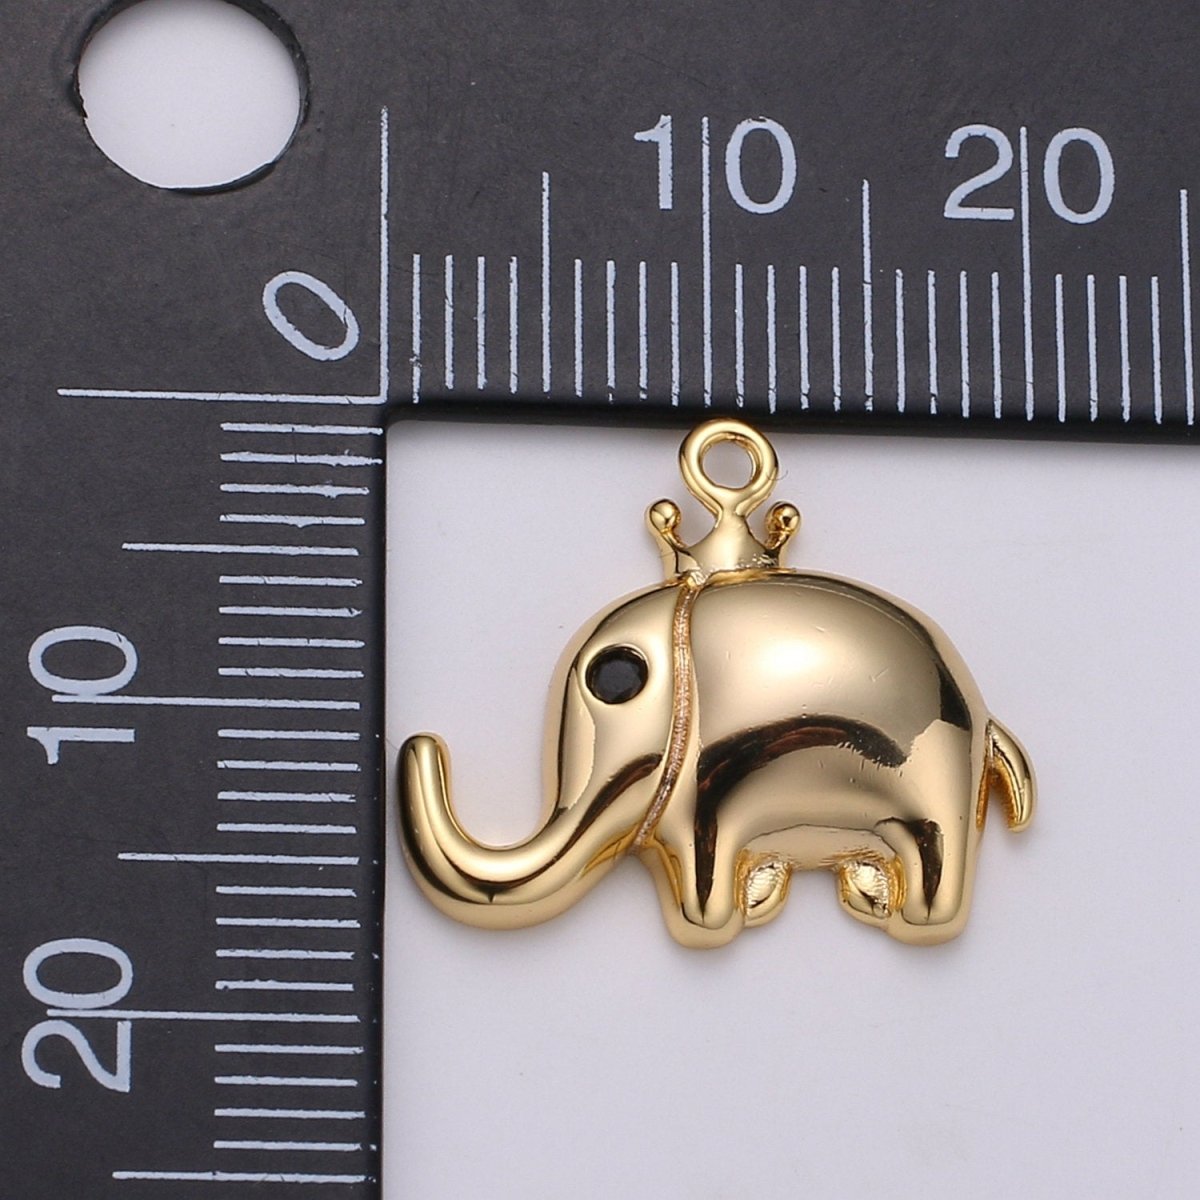 24K Gold Filled Tiny Mini Elephant Charm Baby Elephant Pendant for Bracelet Necklace Earring Supply D-787 - DLUXCA